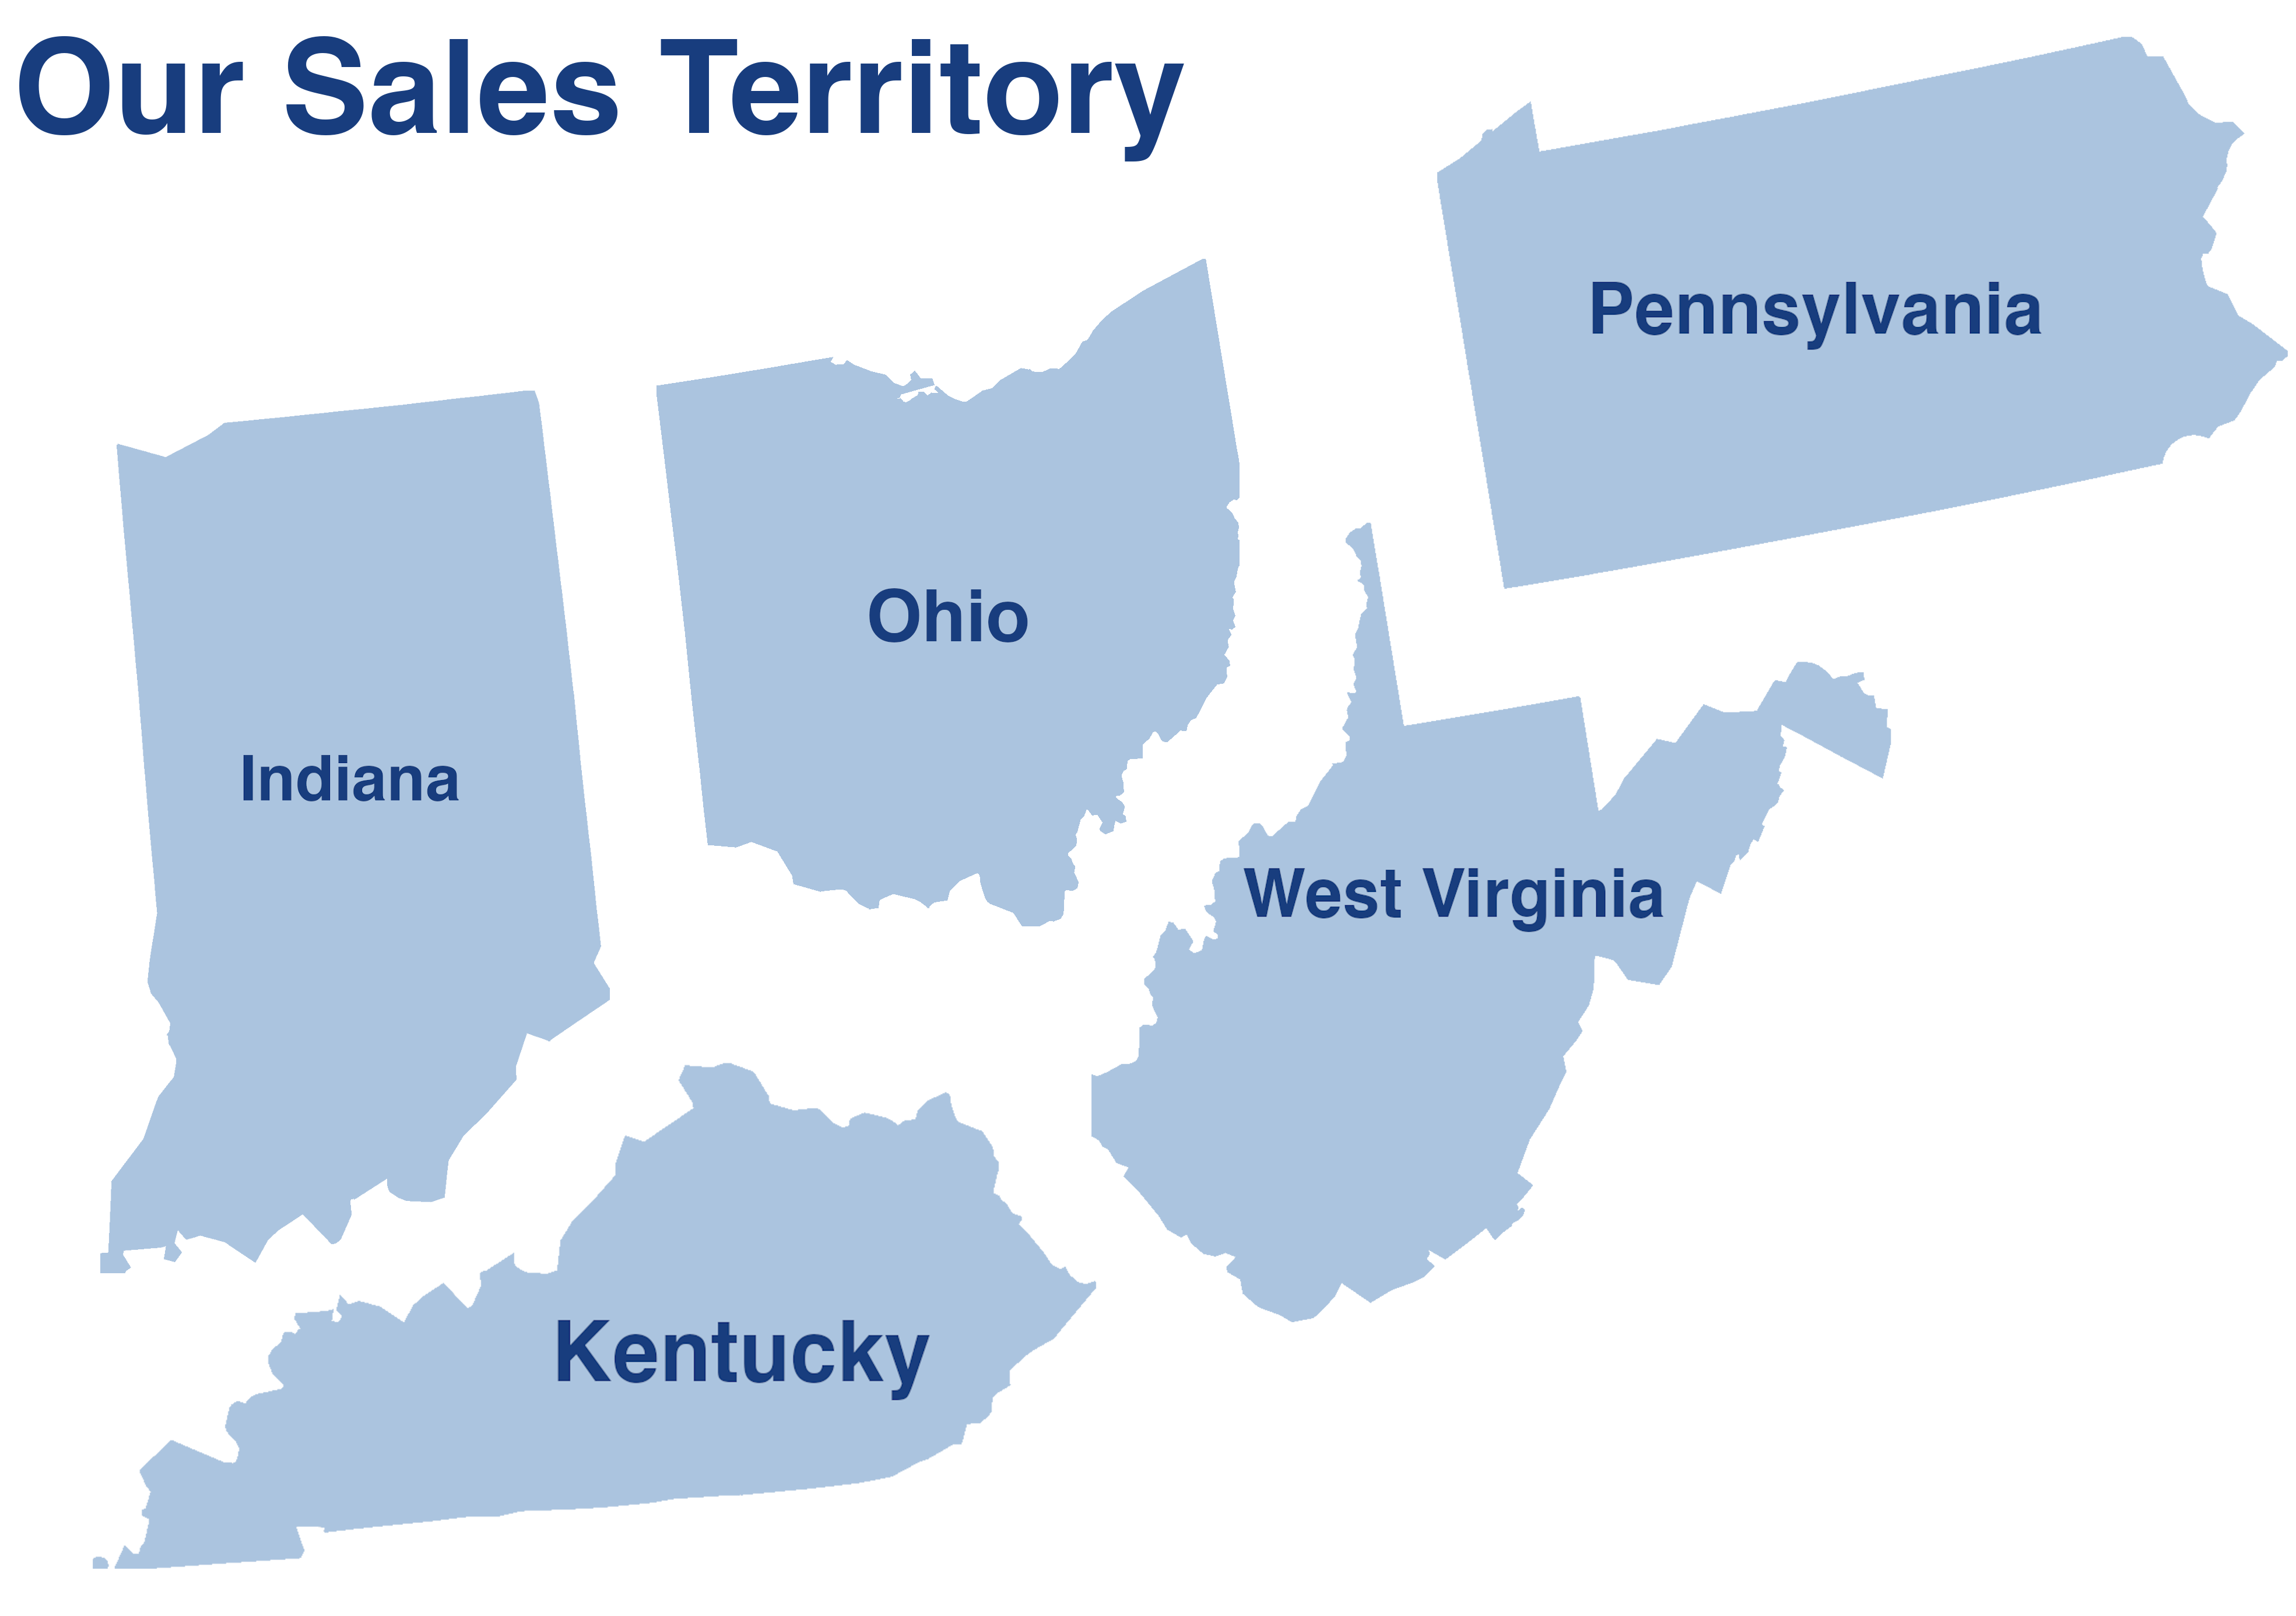 Our Sales Territory: Ohio, Indiana, Pennsylvania, Kentucky, West Virginia